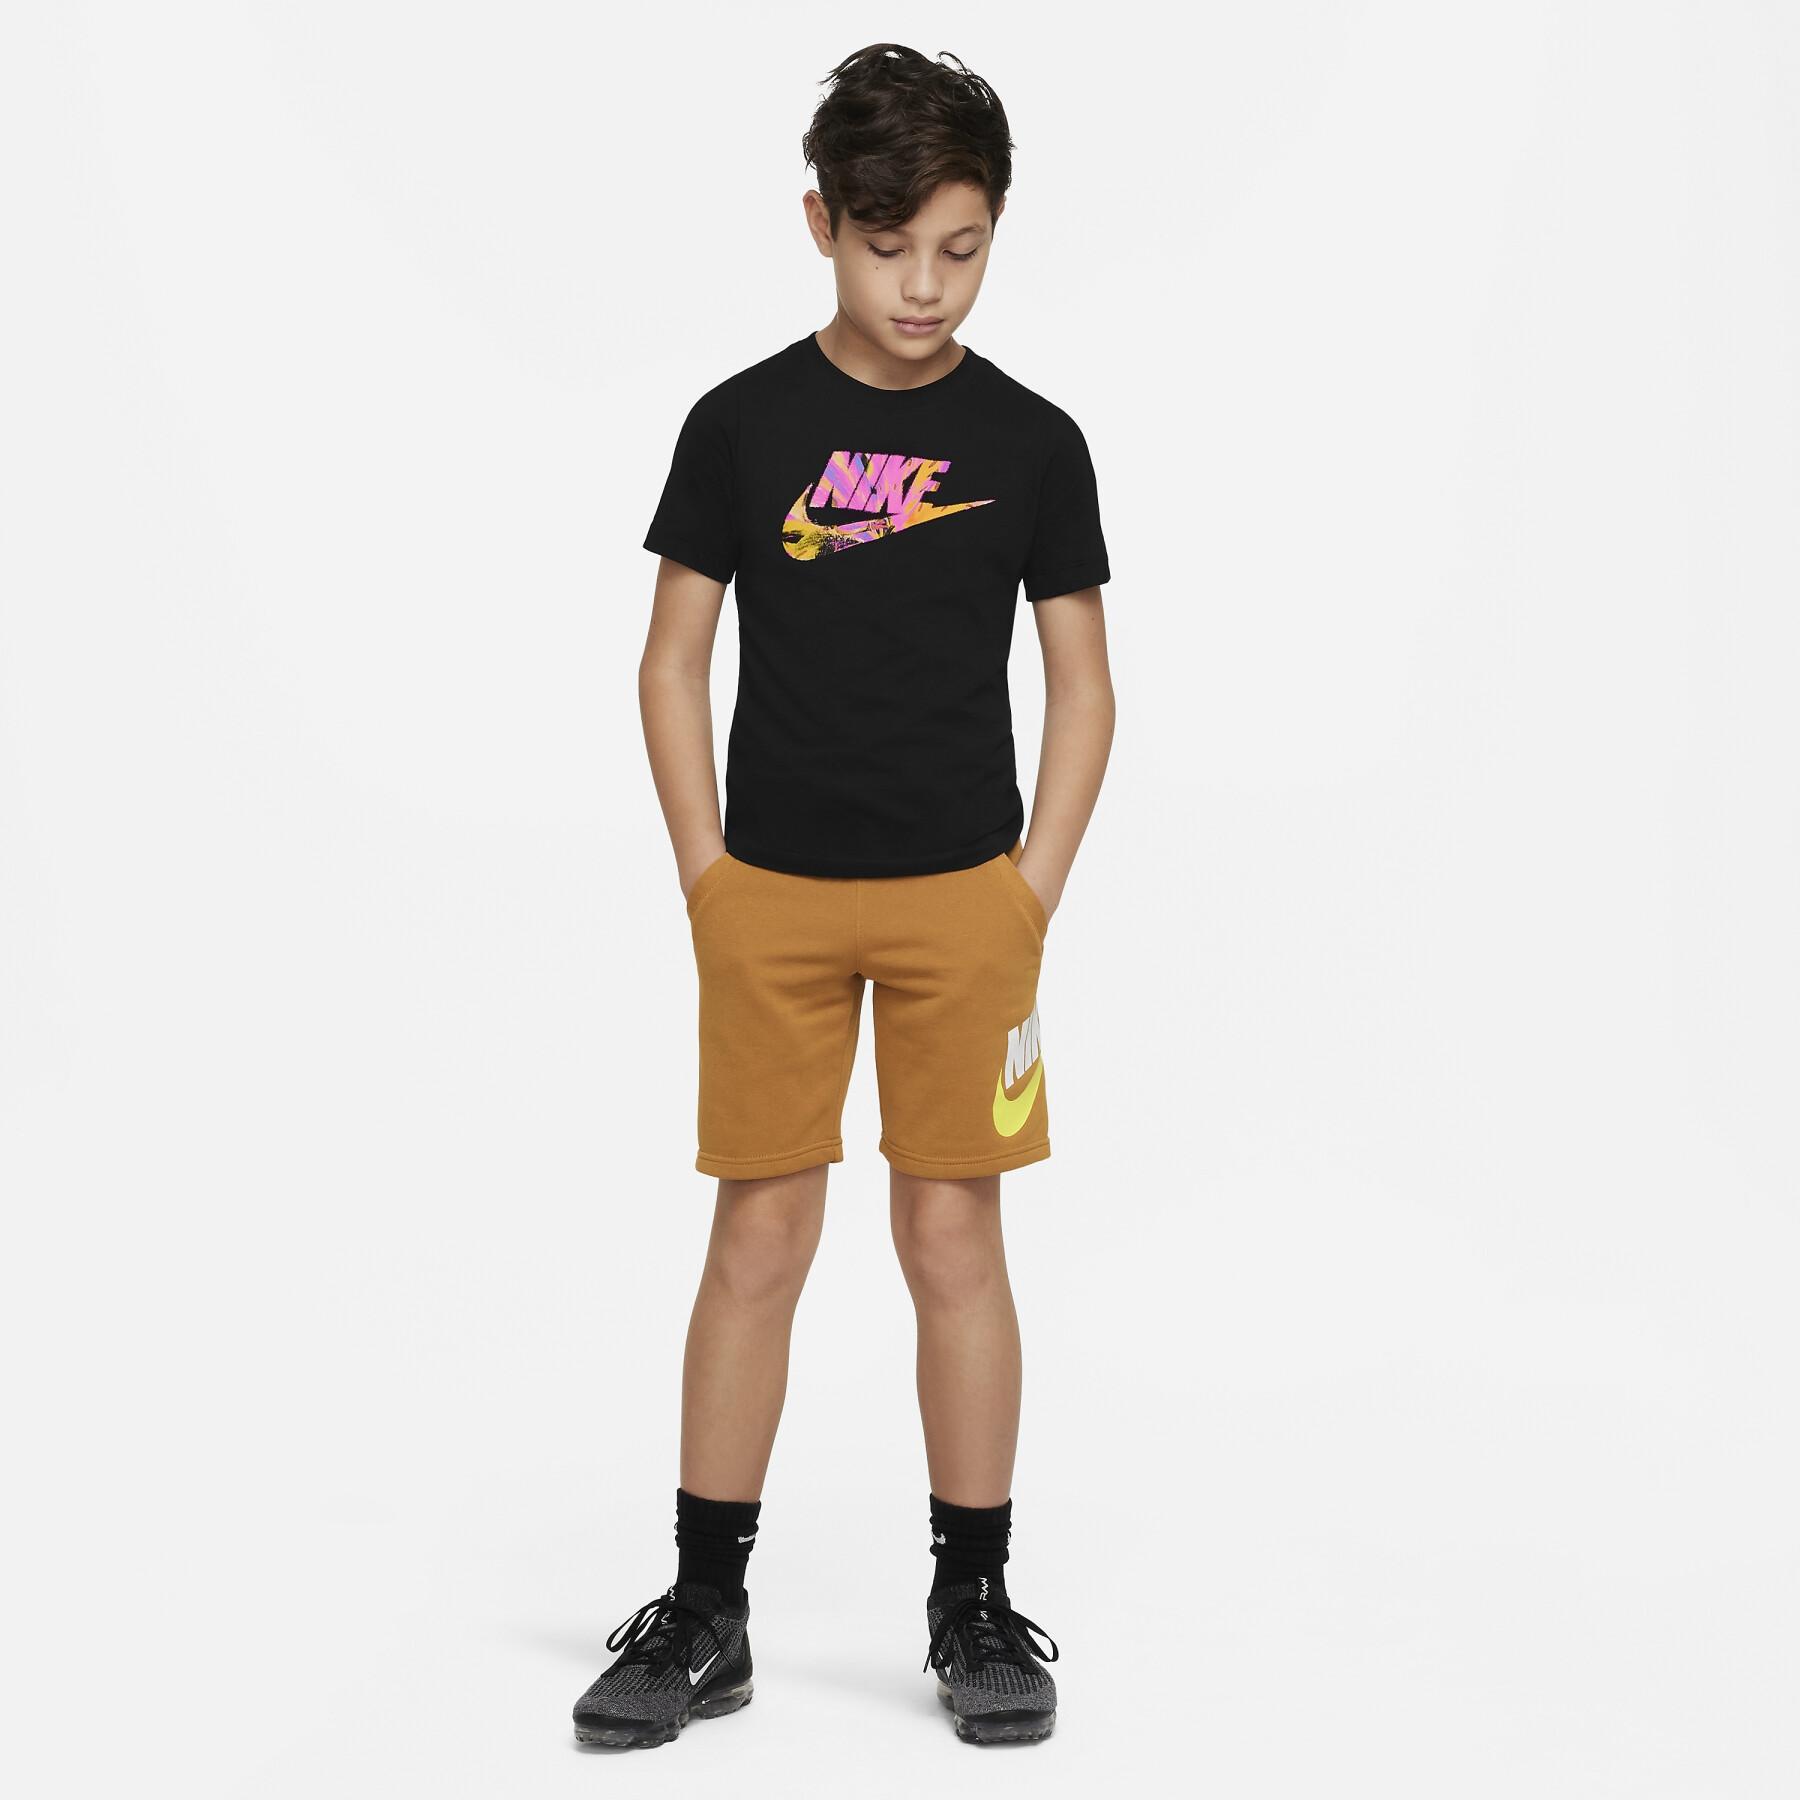 Child's T-shirt Nike HBR 1